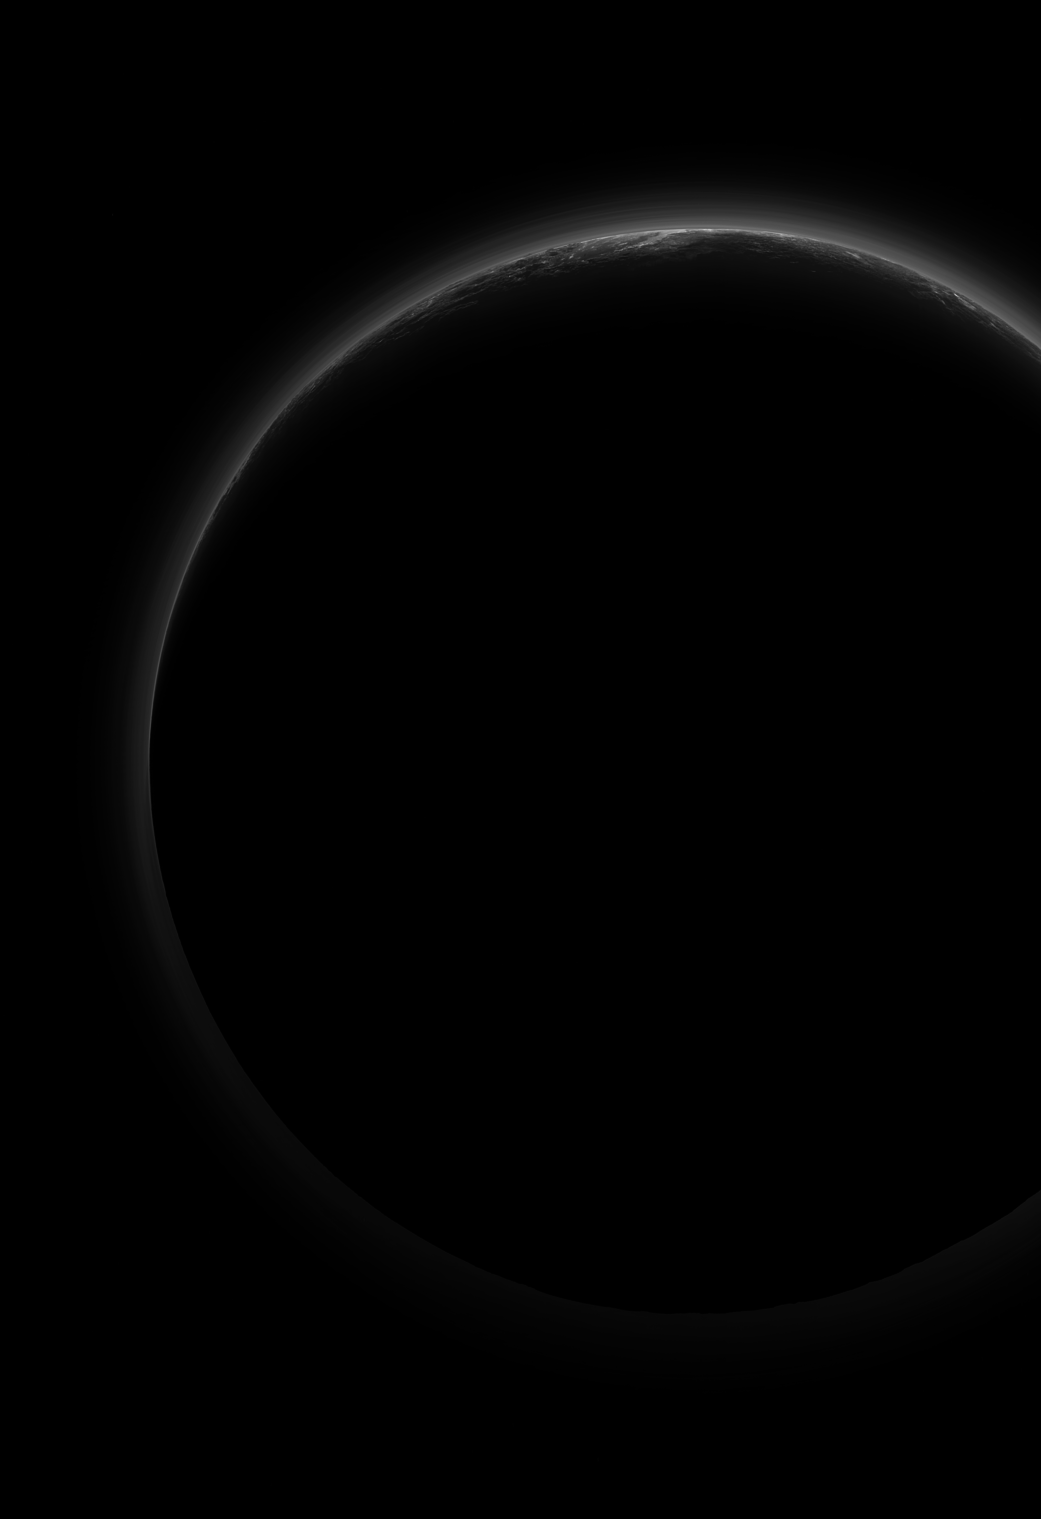 Sunlight filters through and illuminates Pluto’s complex atmospheric haze layers